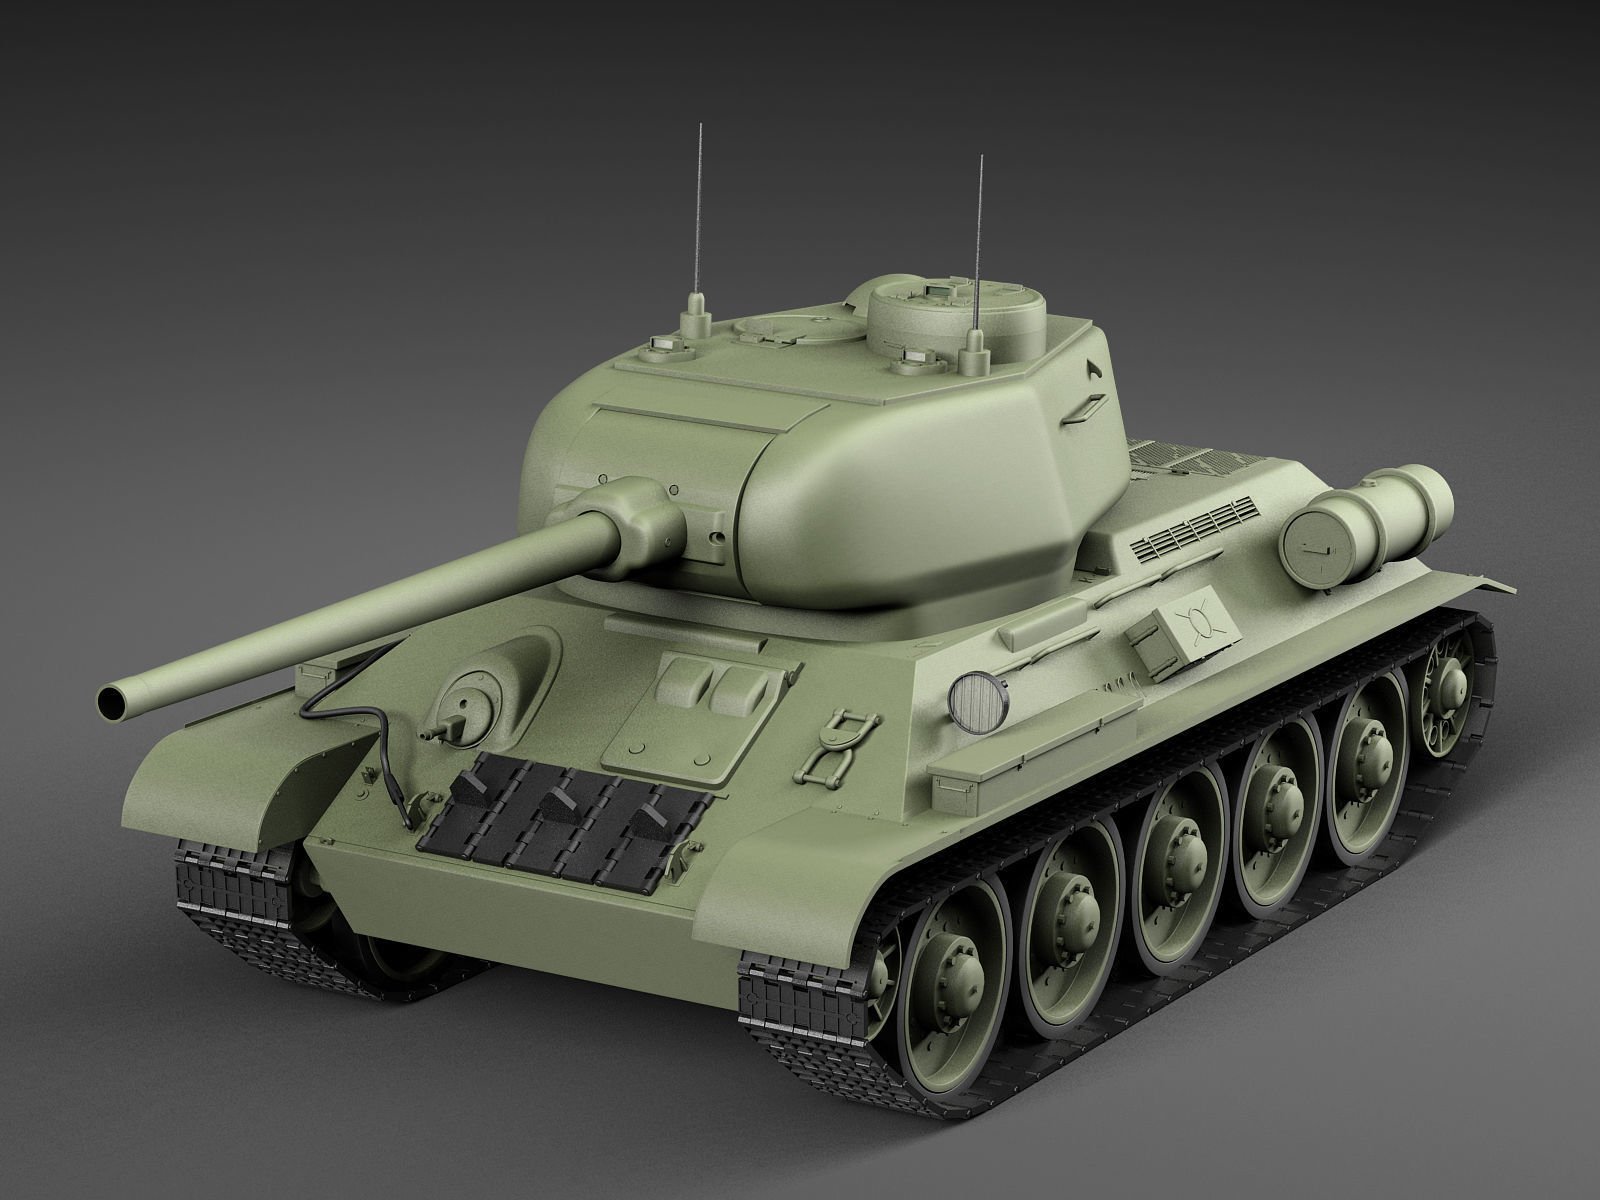 Fifine tank 3. Т 34 85 В 3д. Танк т34. Танк т34 85 3д модель. Т34 танк 3д.